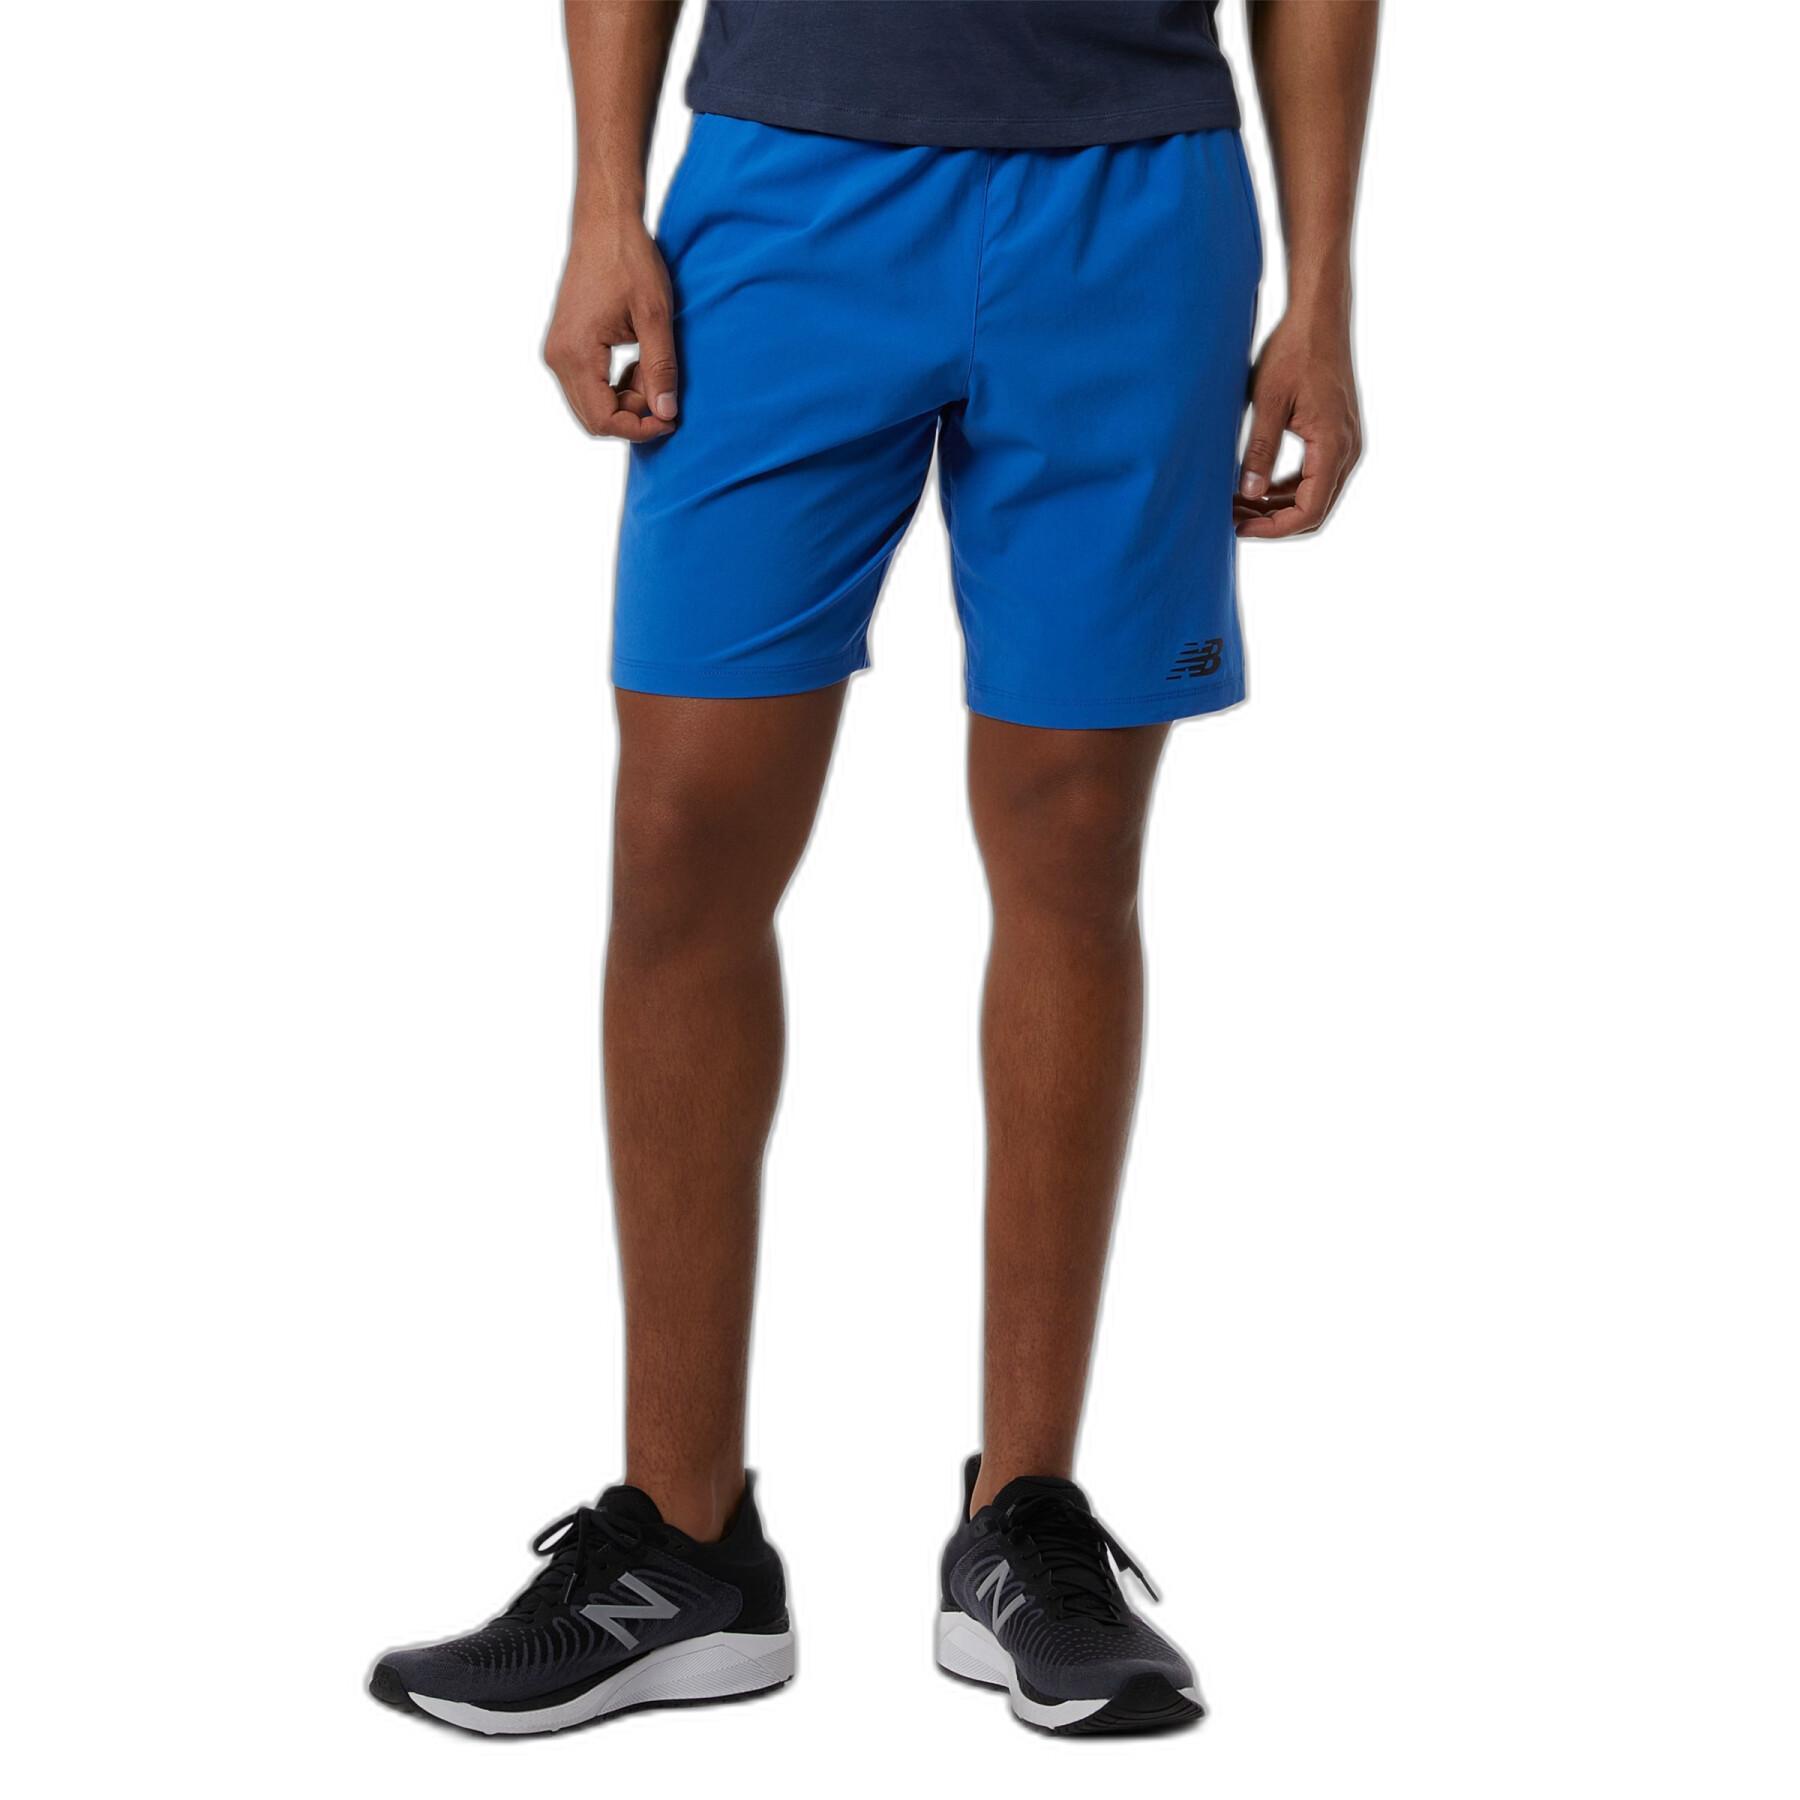 Pantalones cortos tejidos con logotipo New Balance Tenacity 9 "